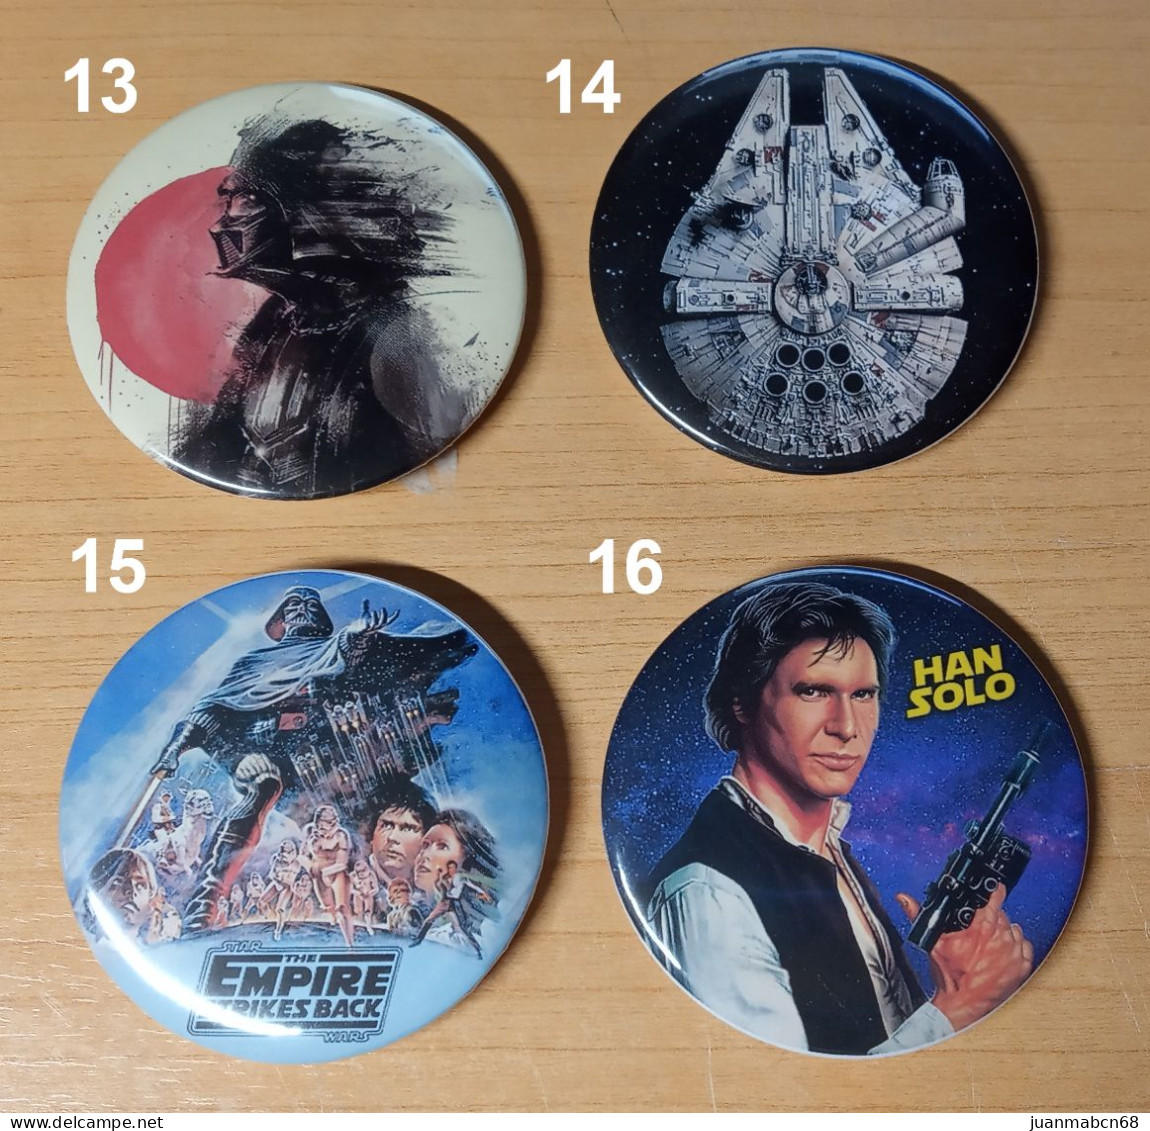 12 Chapas De Coleccion De Star Wars De 58mm (grandes) - Lots